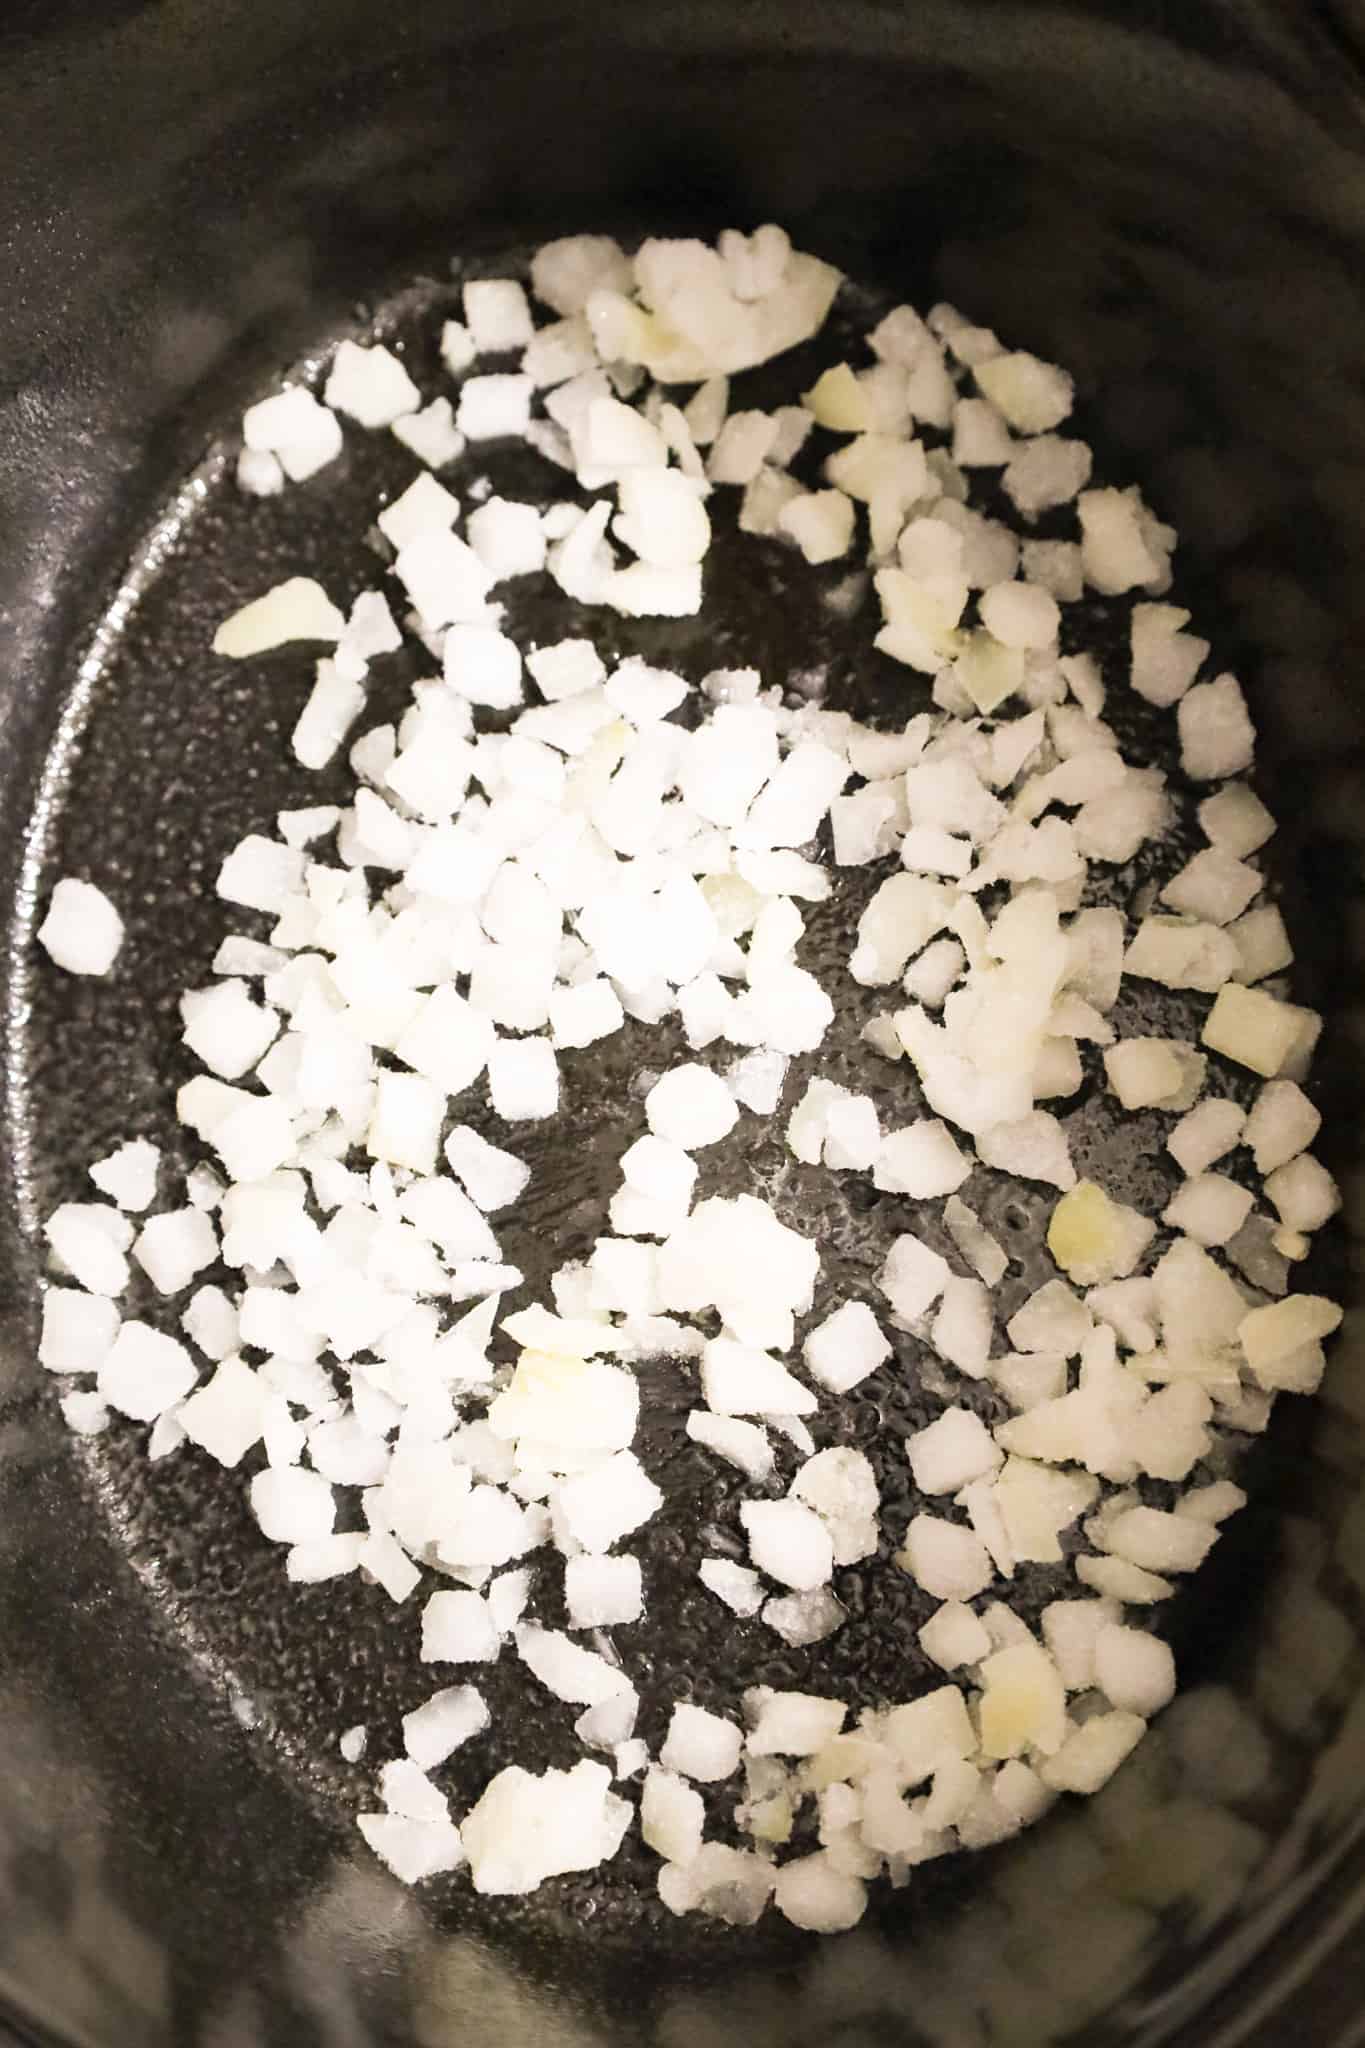 diced onions in a crock pot